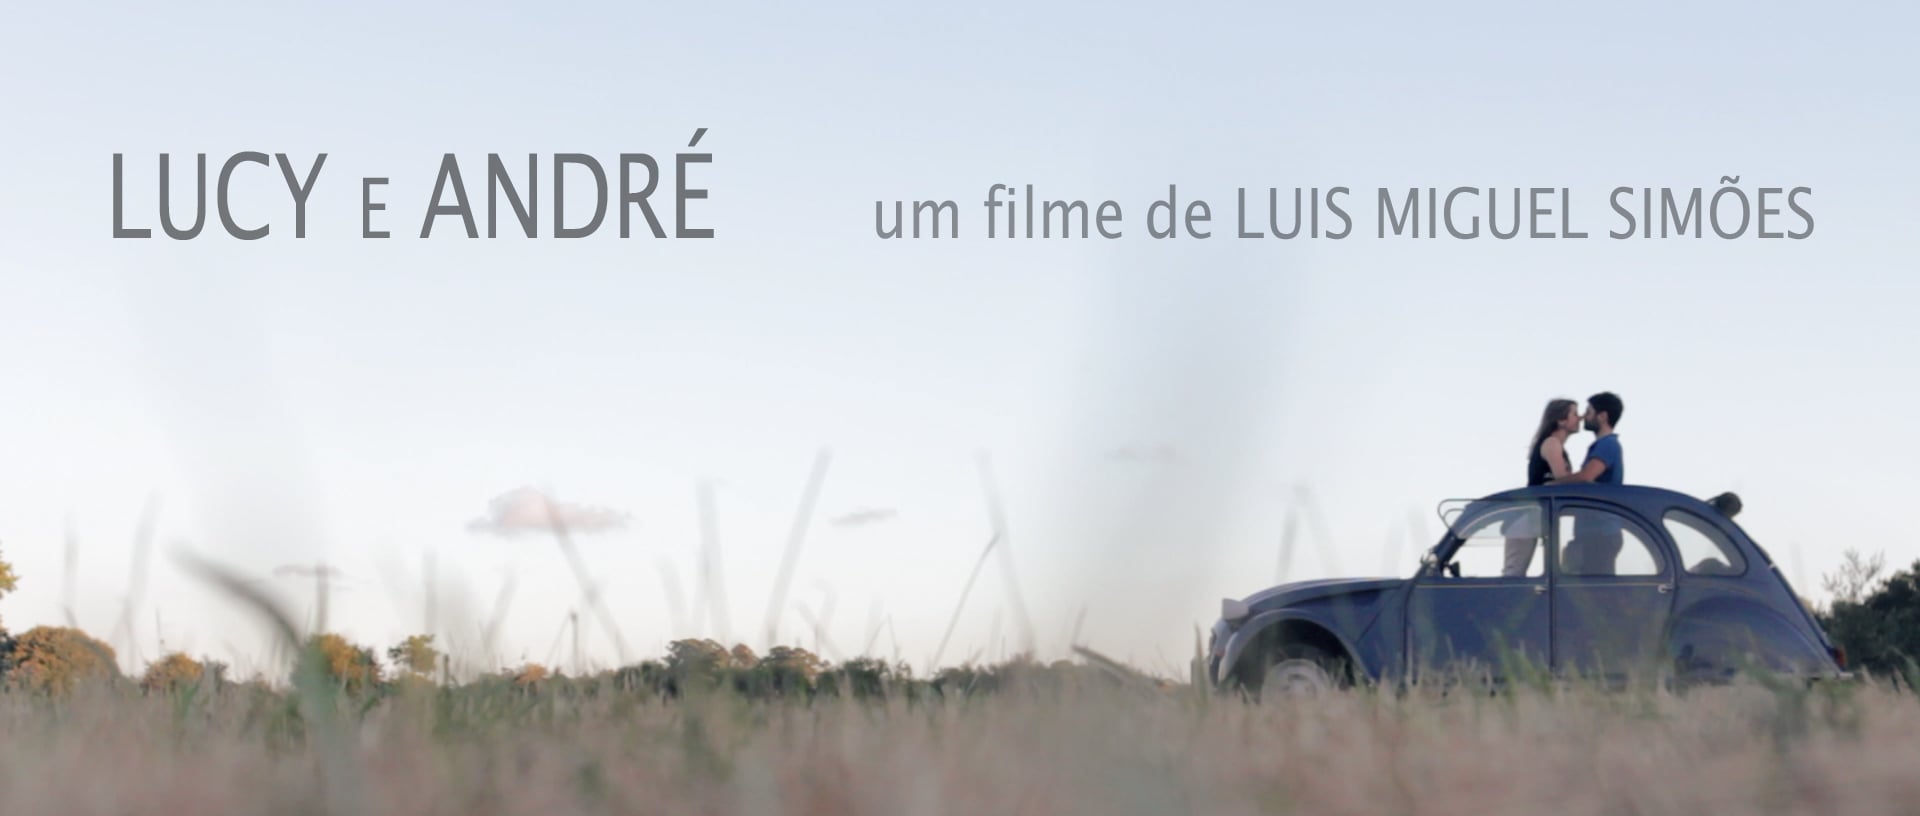 Luis Simões Film